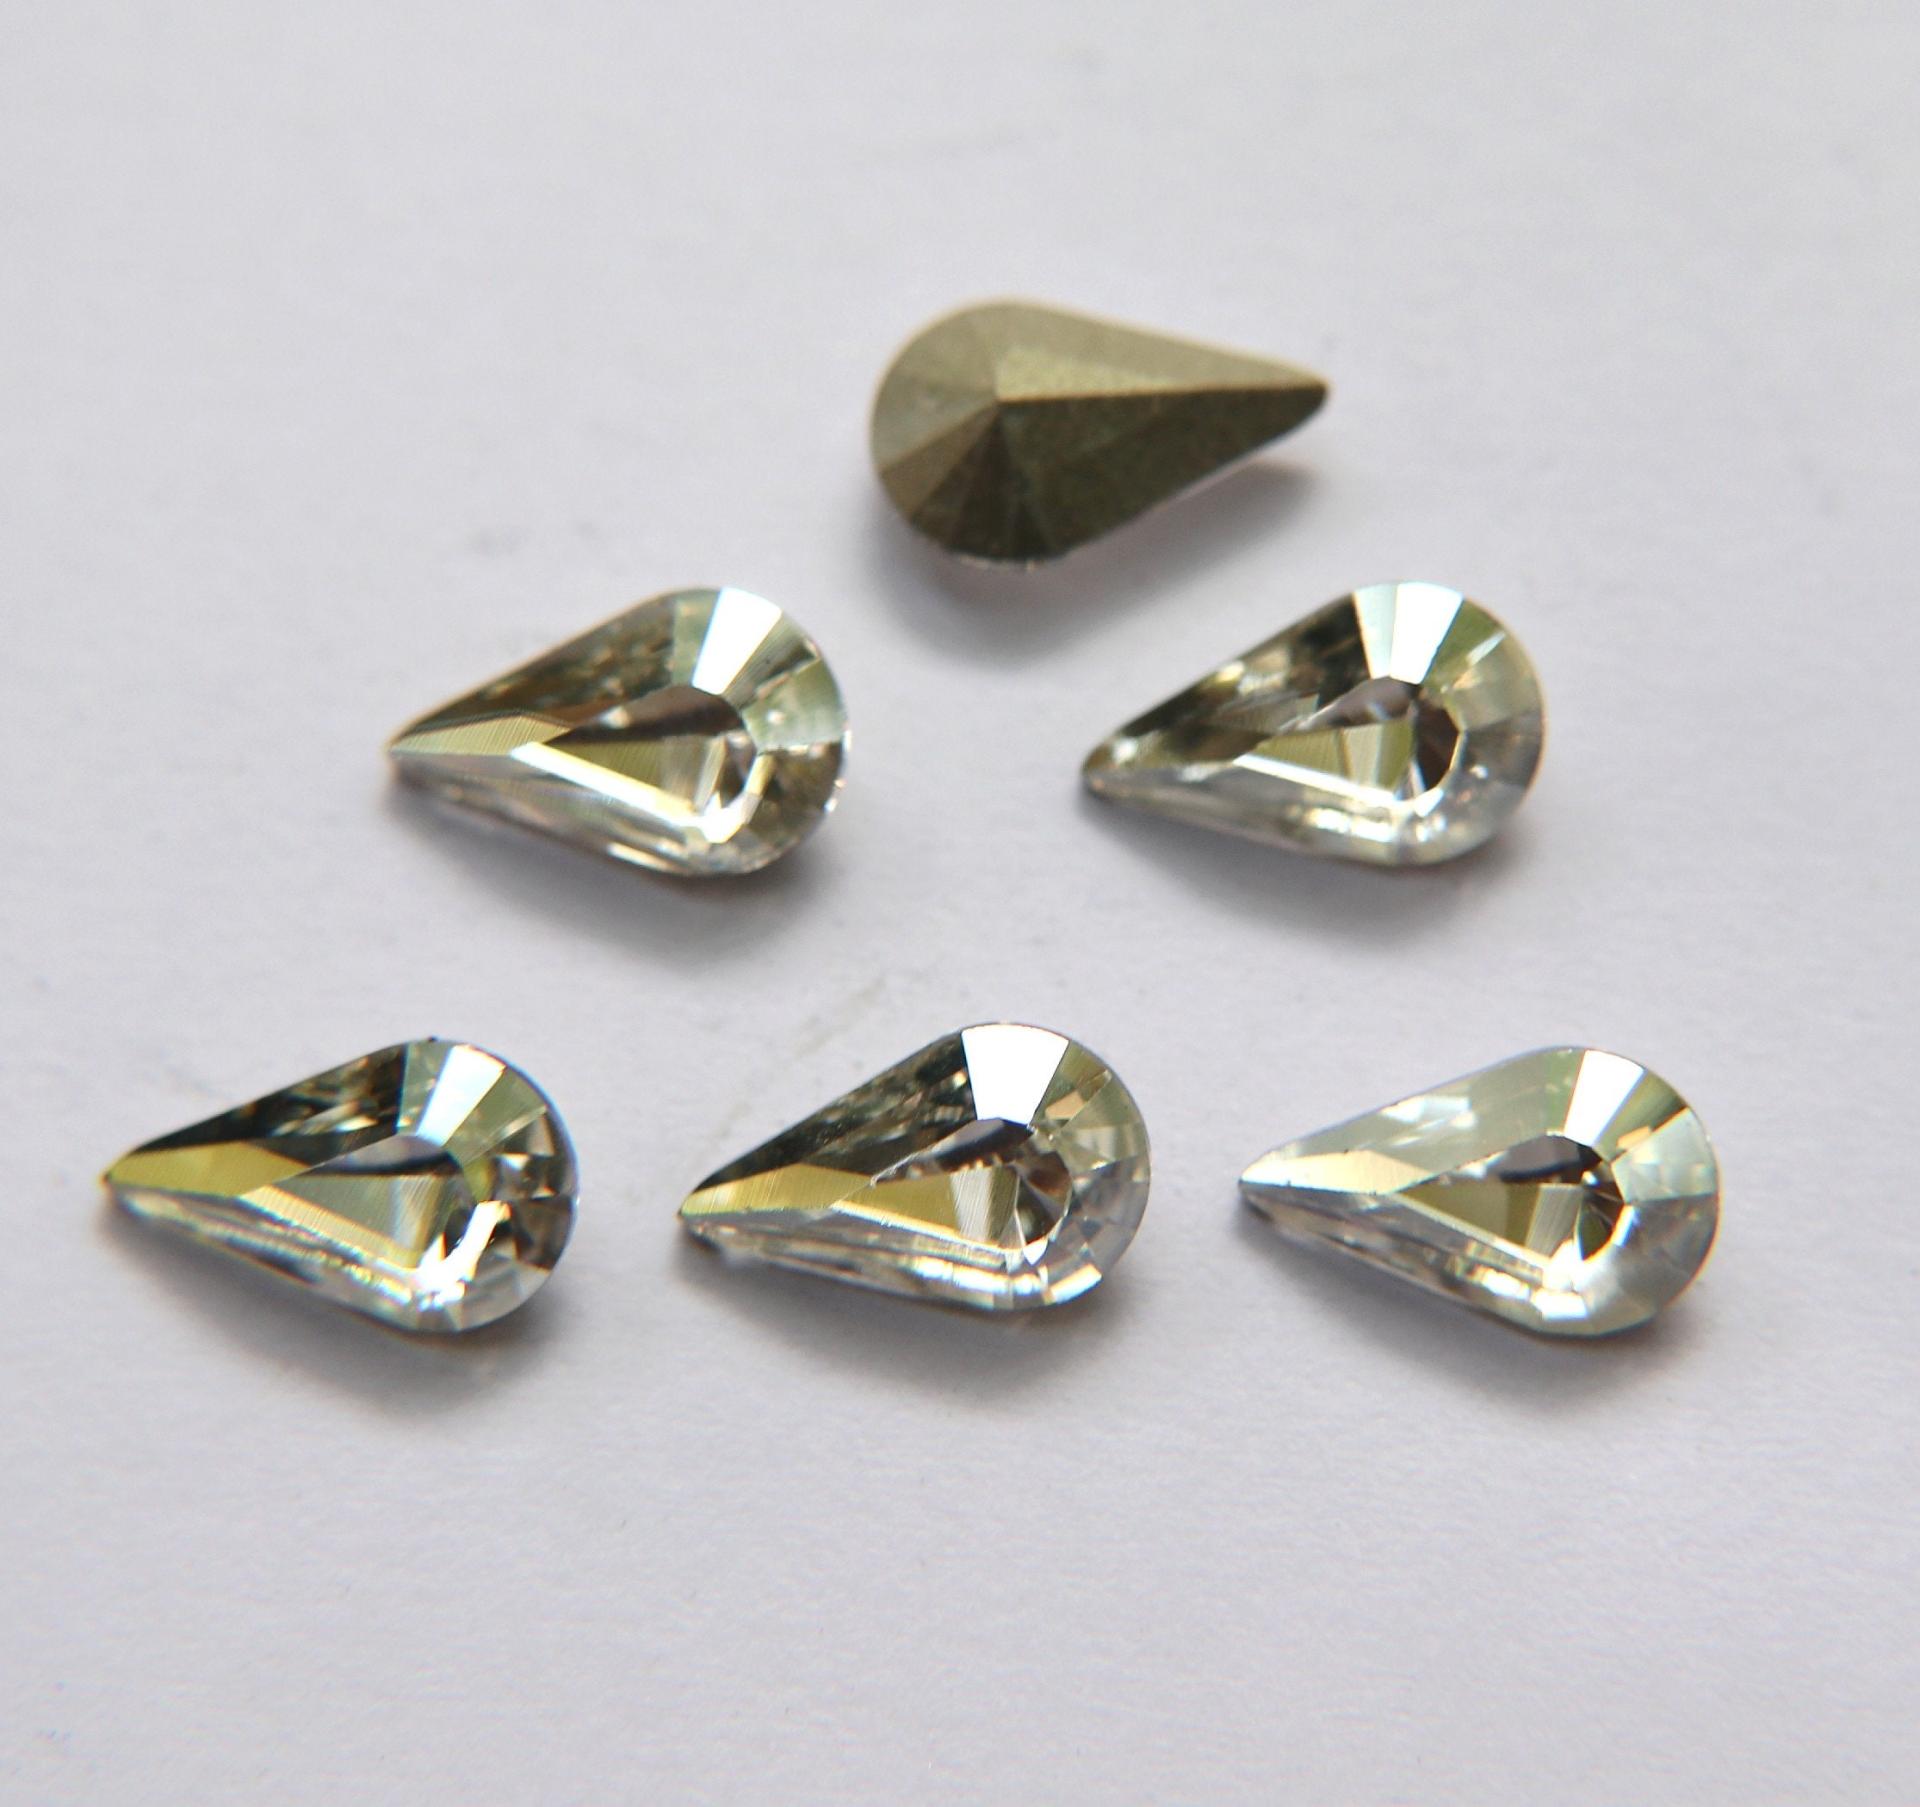 13x7.8mm Swarovski 4300 fancy Pear in (9 Colors) 2/6/24/72 Pieces Jewery making stones gemstones, fancy opal stones